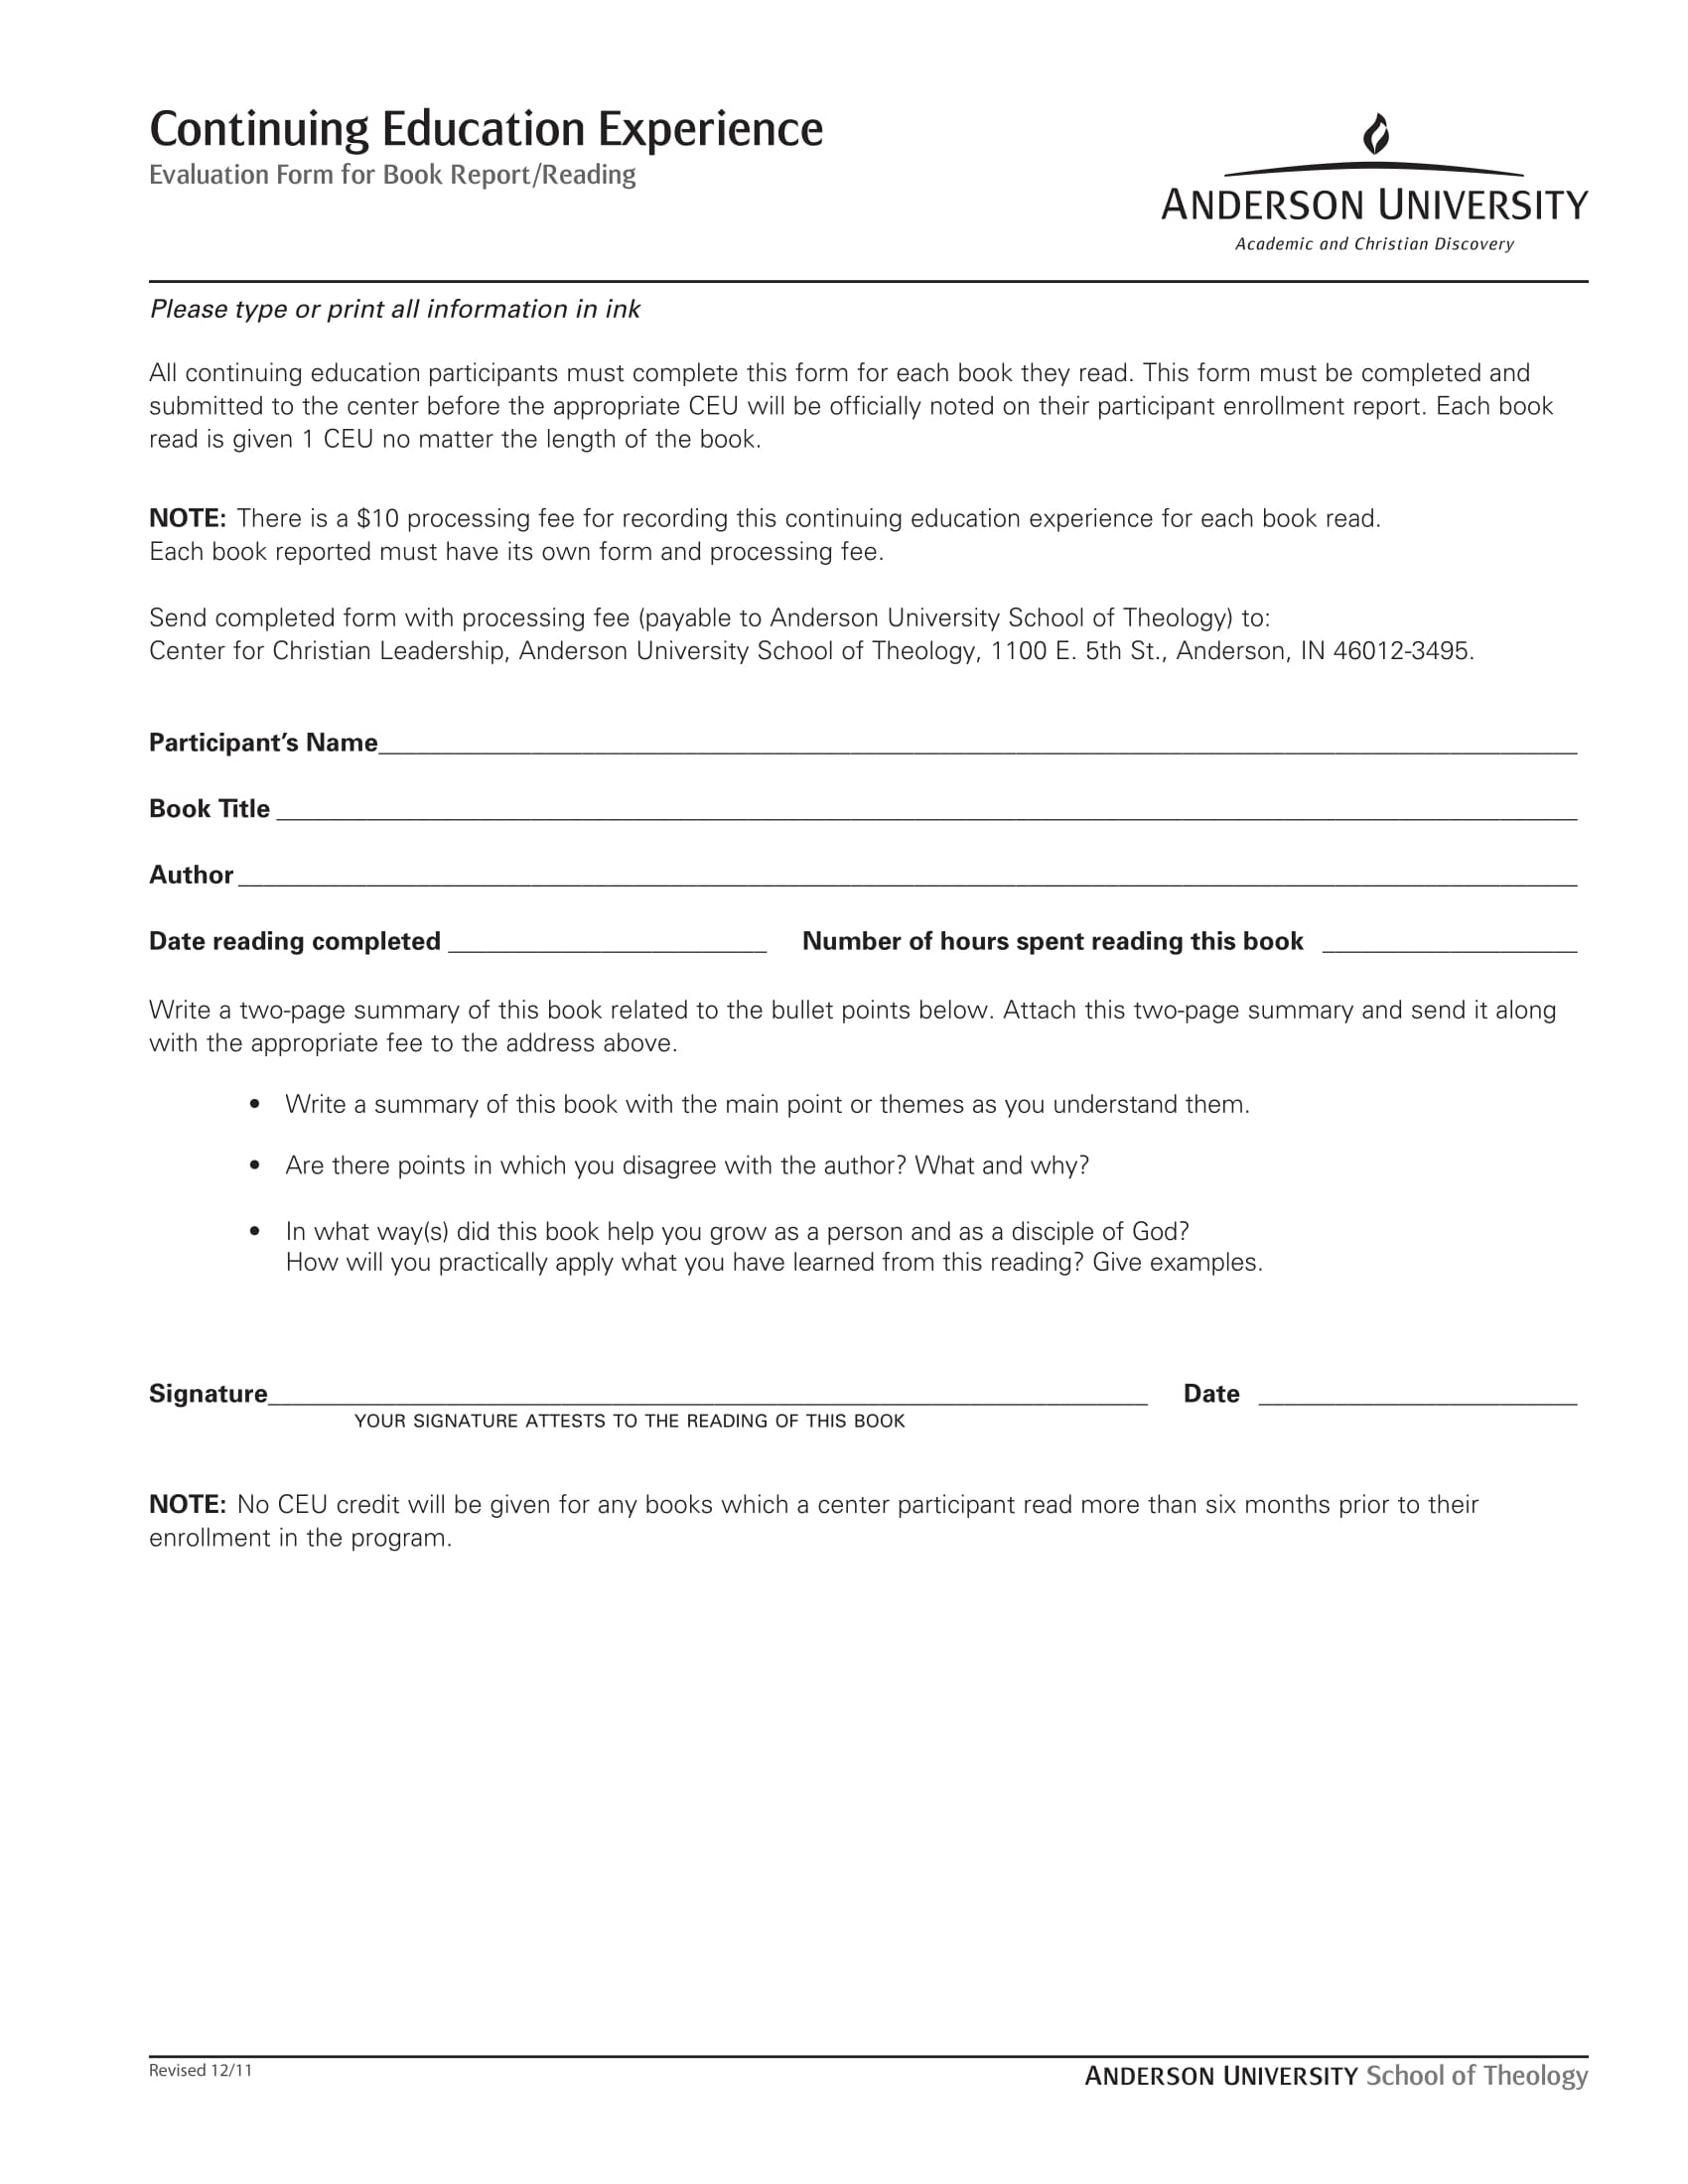 book event report evaluation form 1